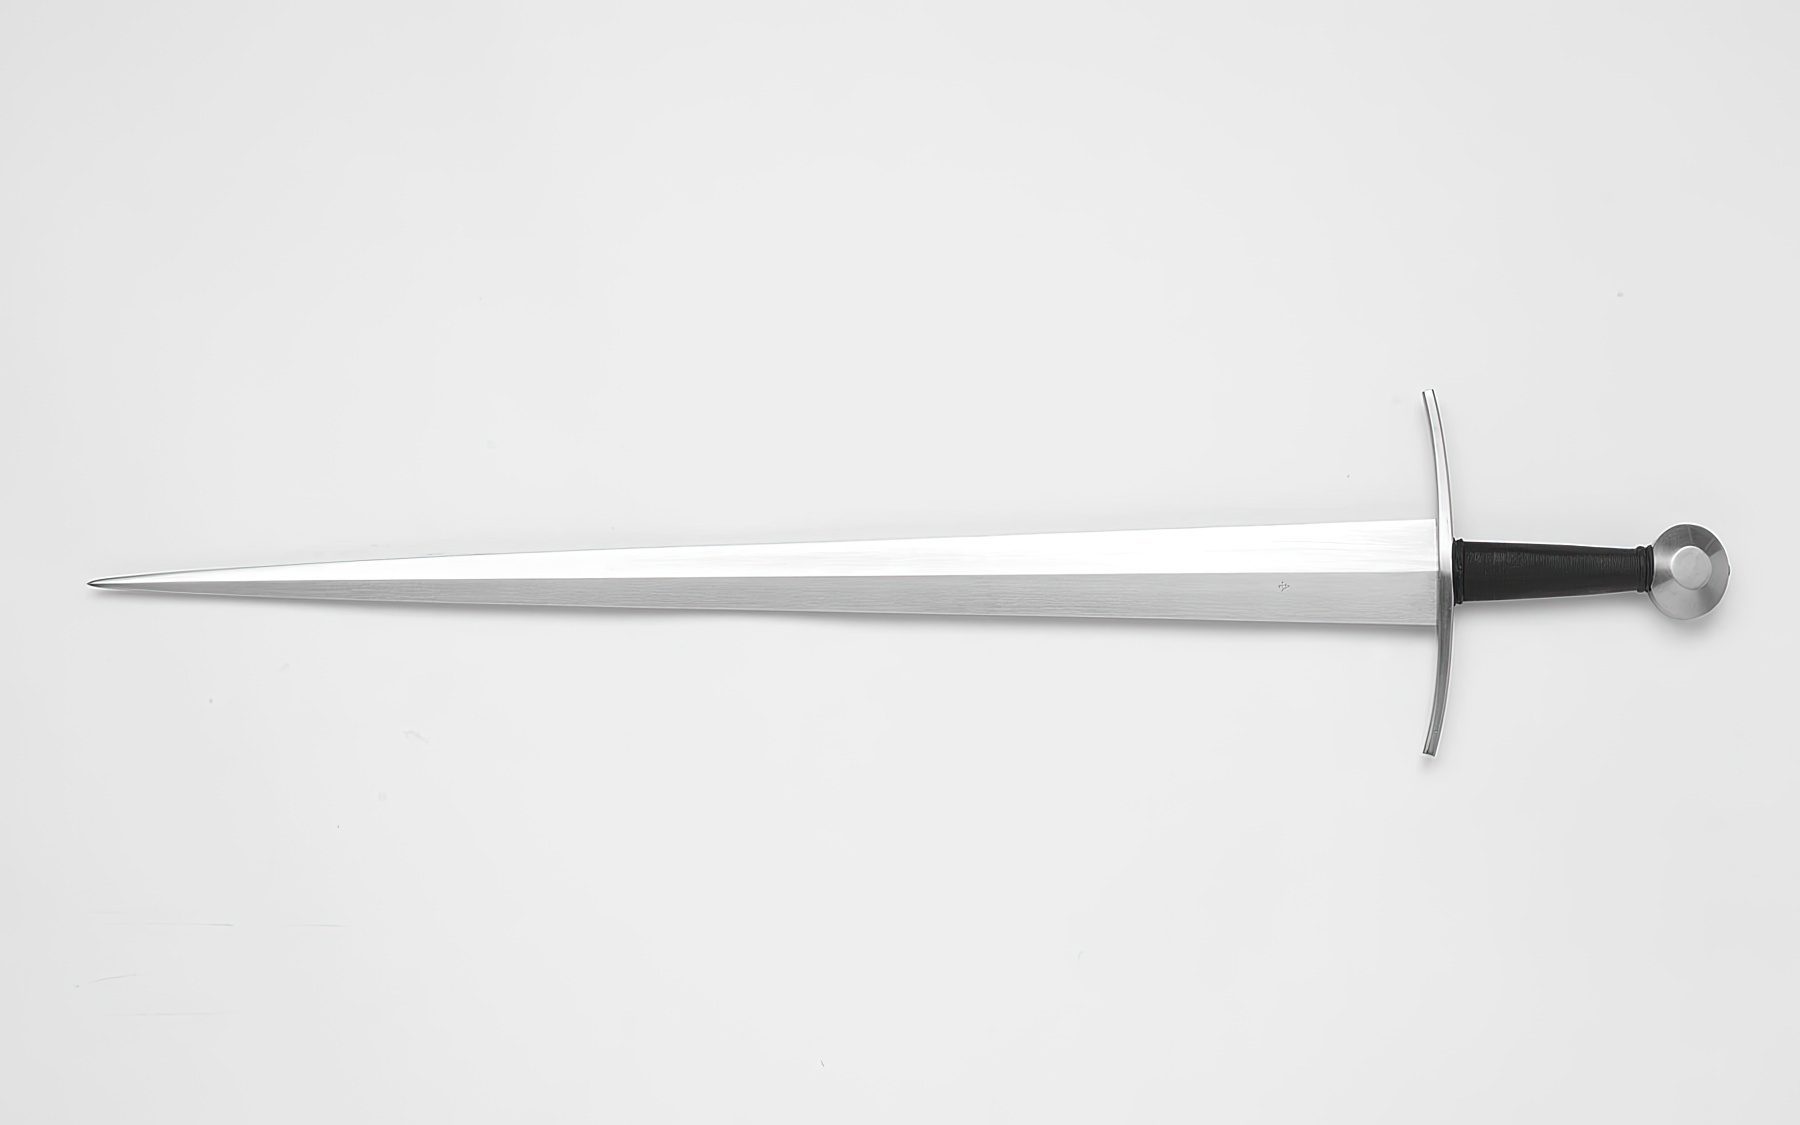 Oakeshott Type XV: The First Medieval European Thrusting Sword